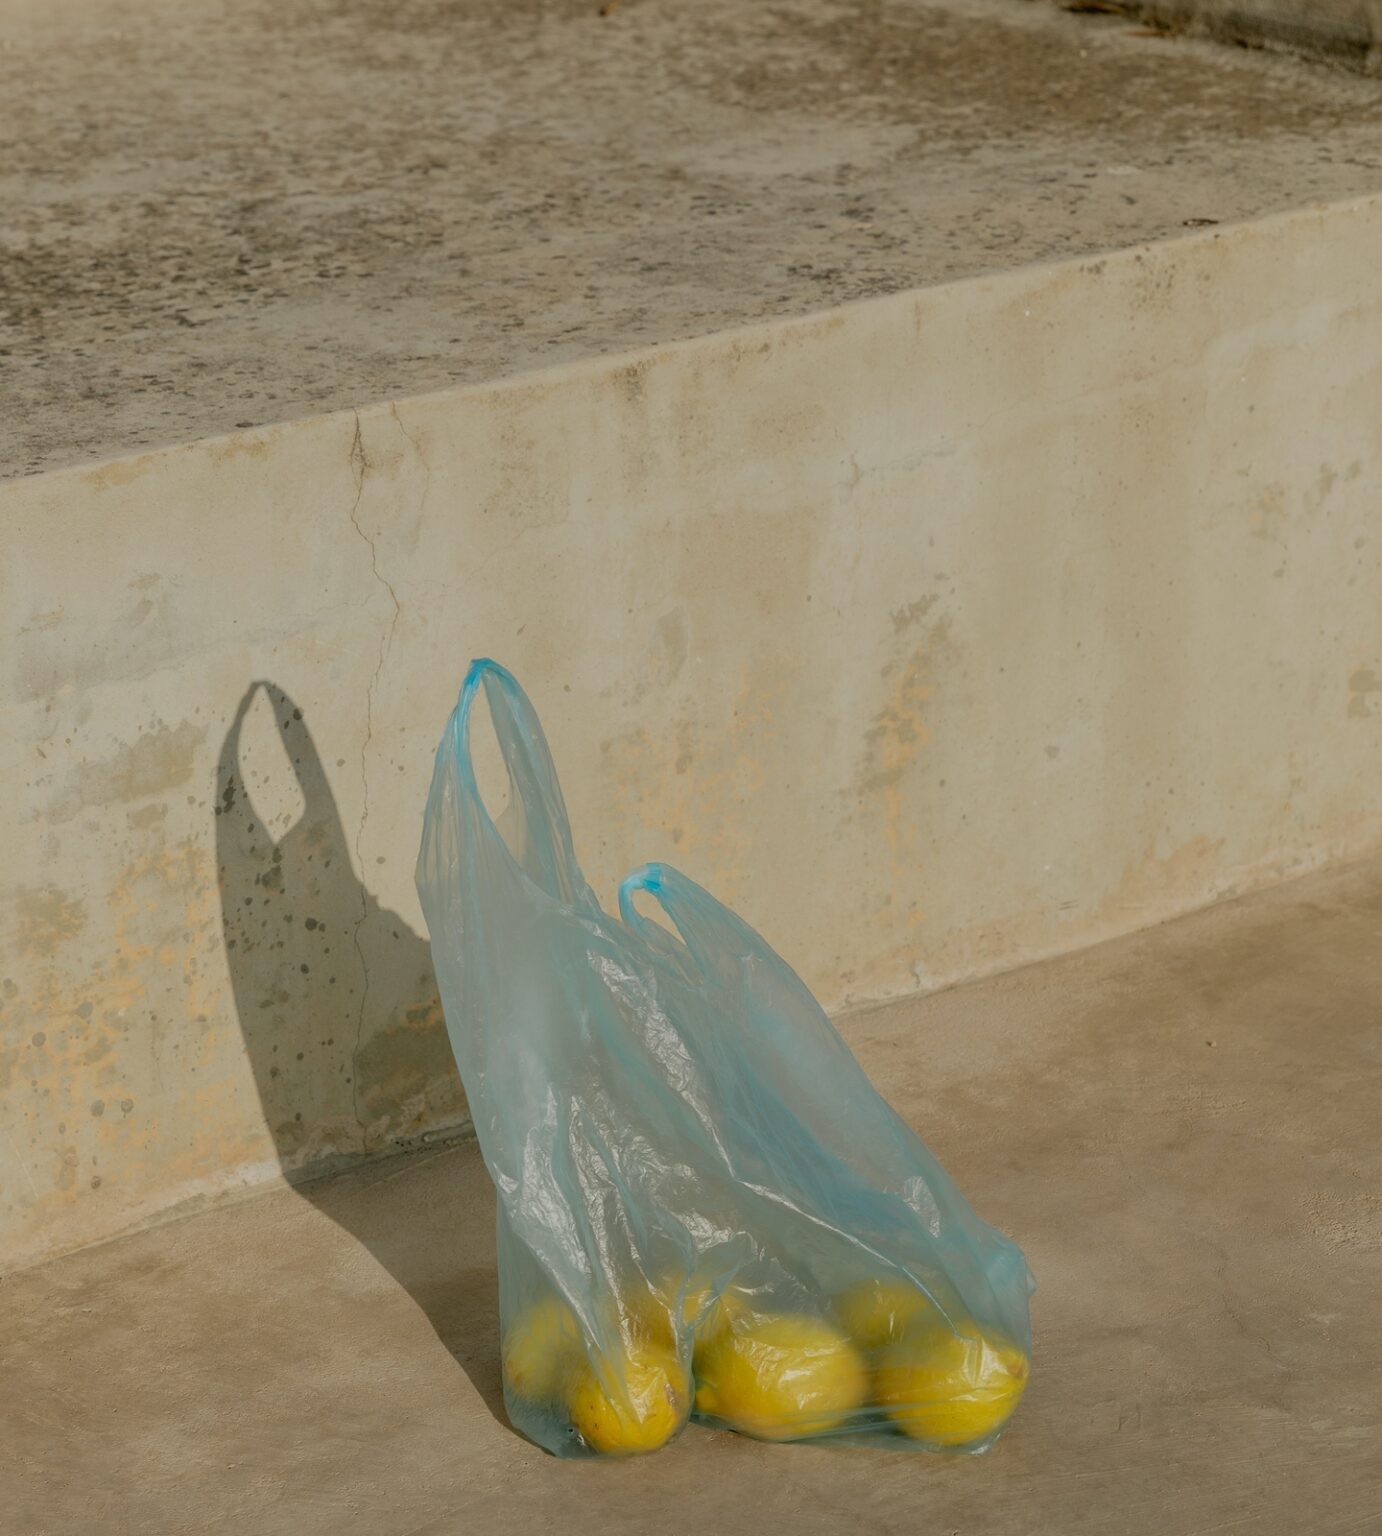 Lemons wasted in plastic bag